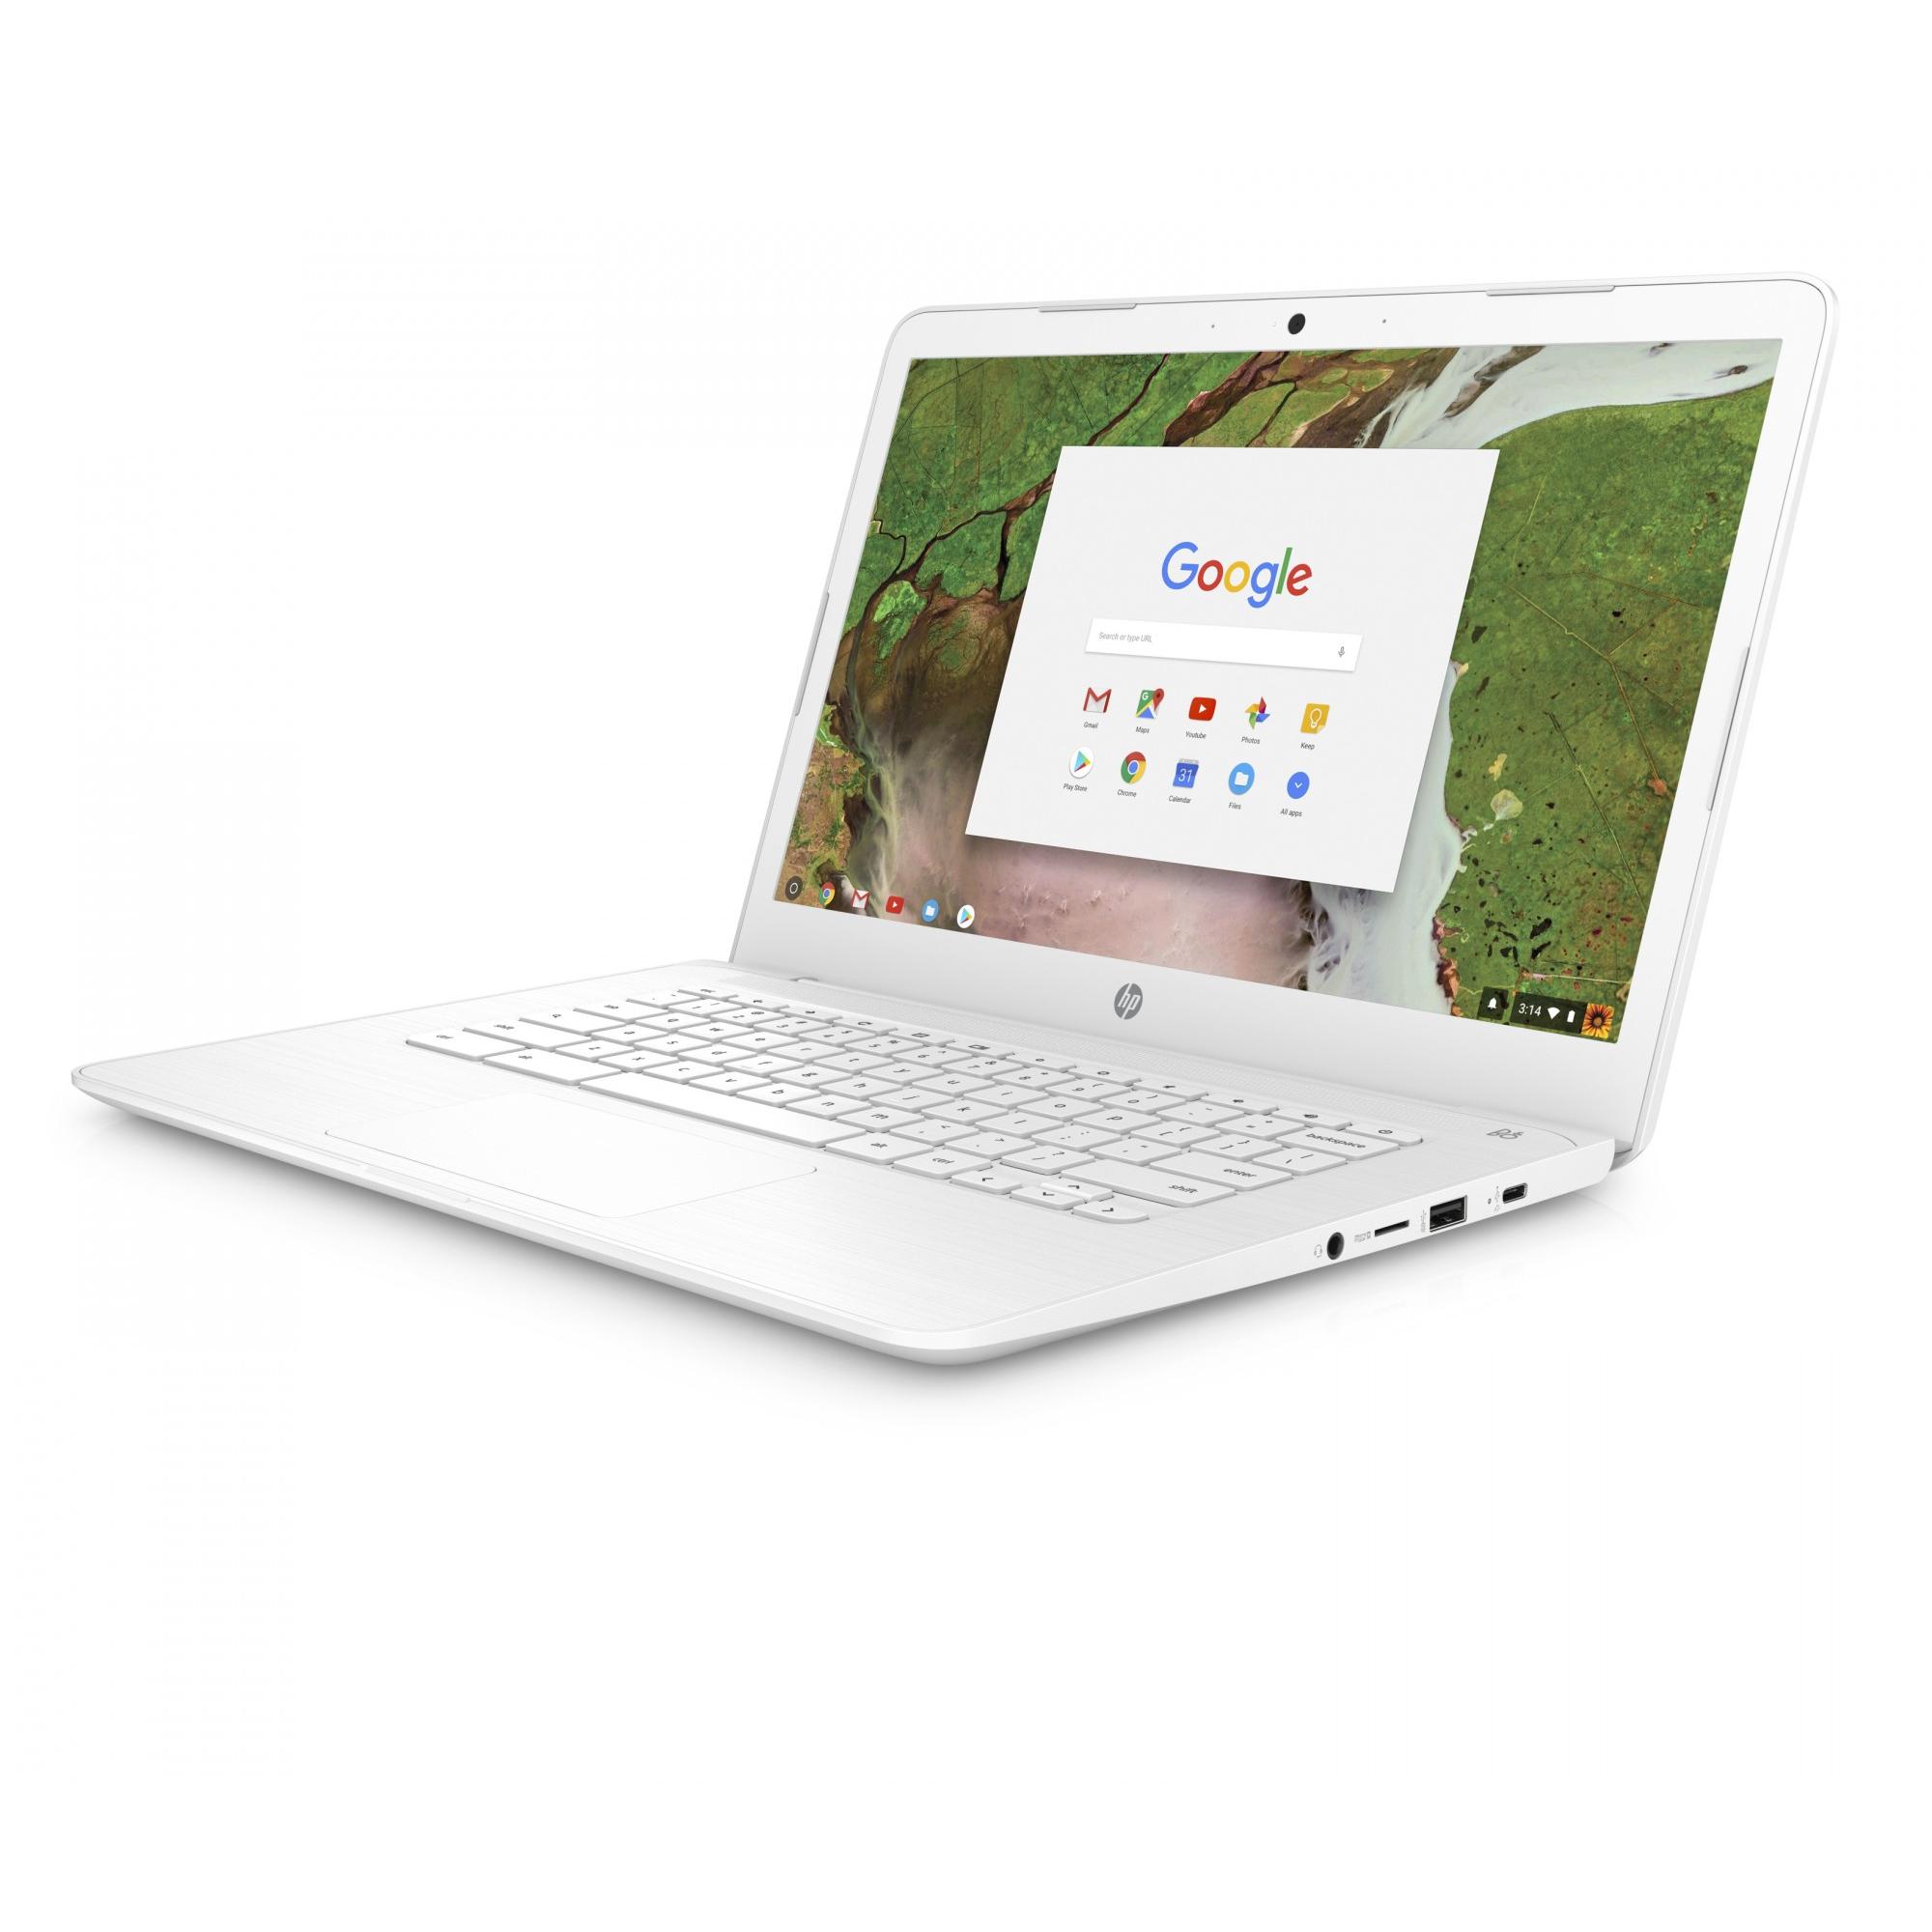 HP Chromebook 14, 14" Full HD Display, Intel Celeron N3350, Intel HD Graphics 500, 32GB eMMC, 4GB SDRAM, B&O Play Audio, Snow White, 14-ca051wm - image 4 of 5